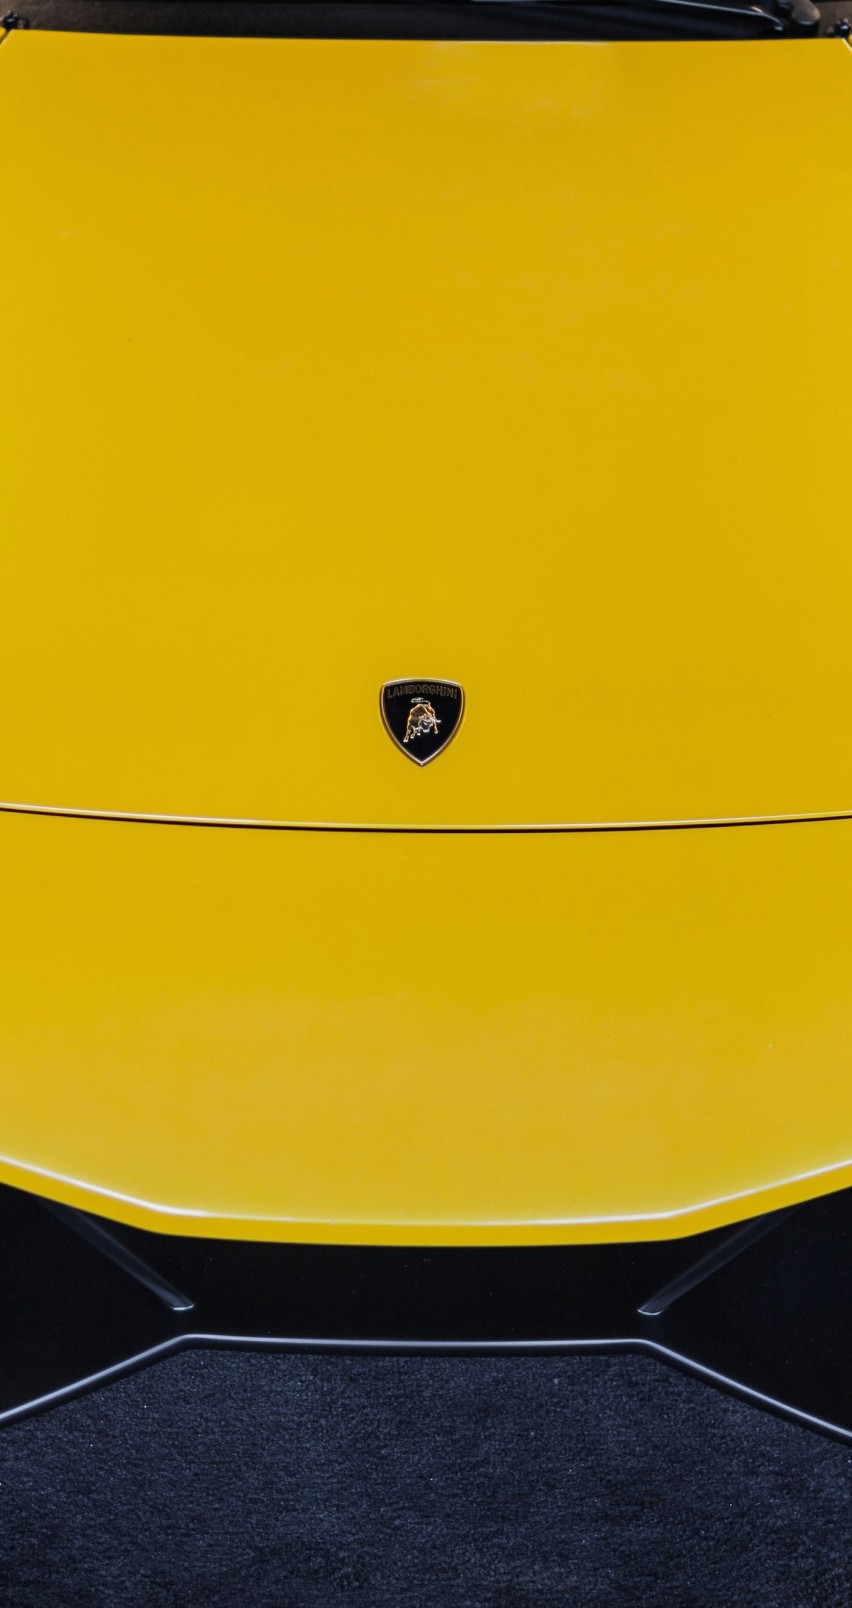 Lamborghini Murcielago LP670 Front Wallpaper for Apple iPhone 6 / 6s